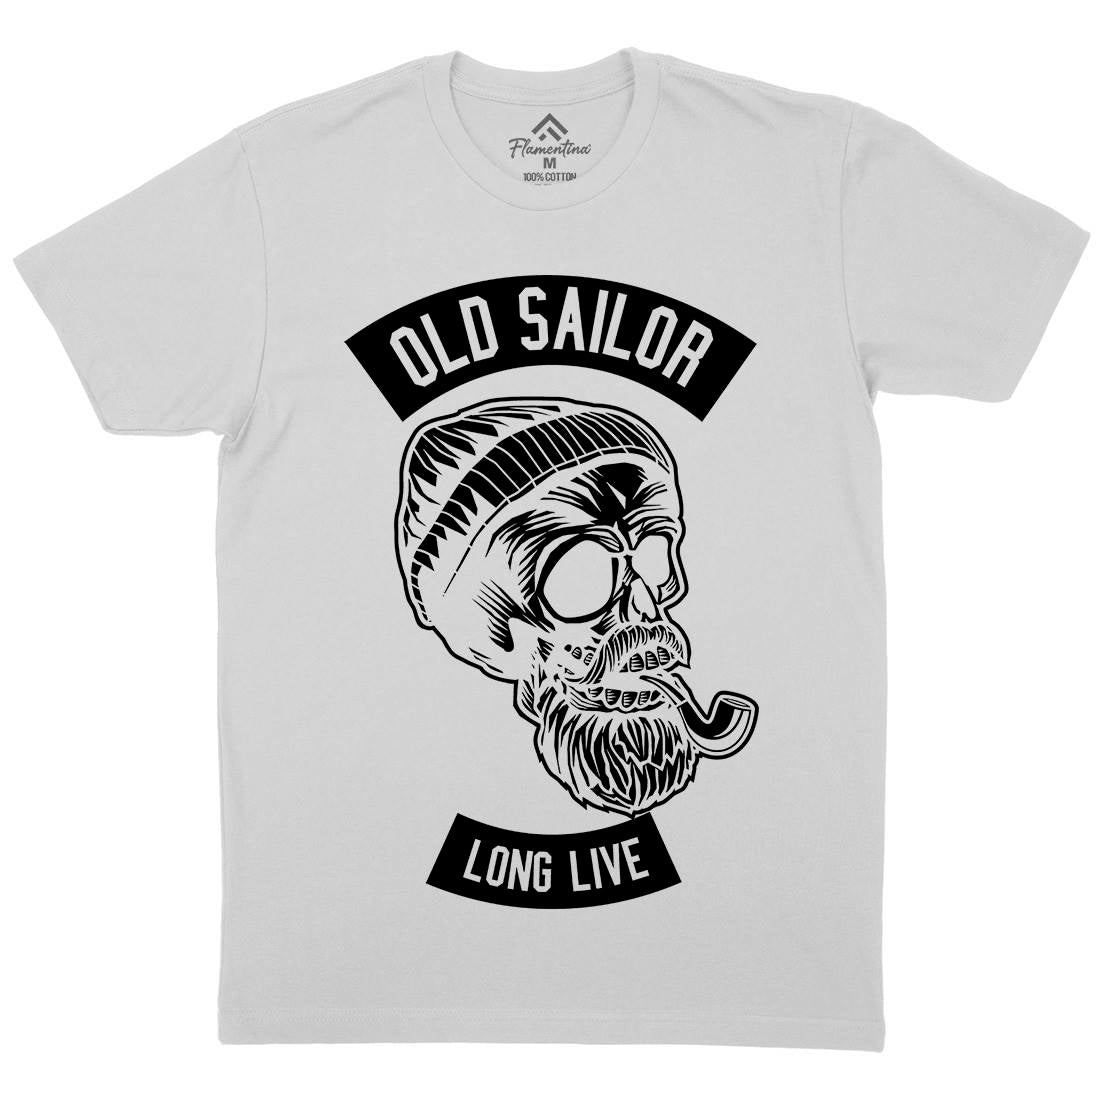 Old Sailor Mens Crew Neck T-Shirt Navy B590